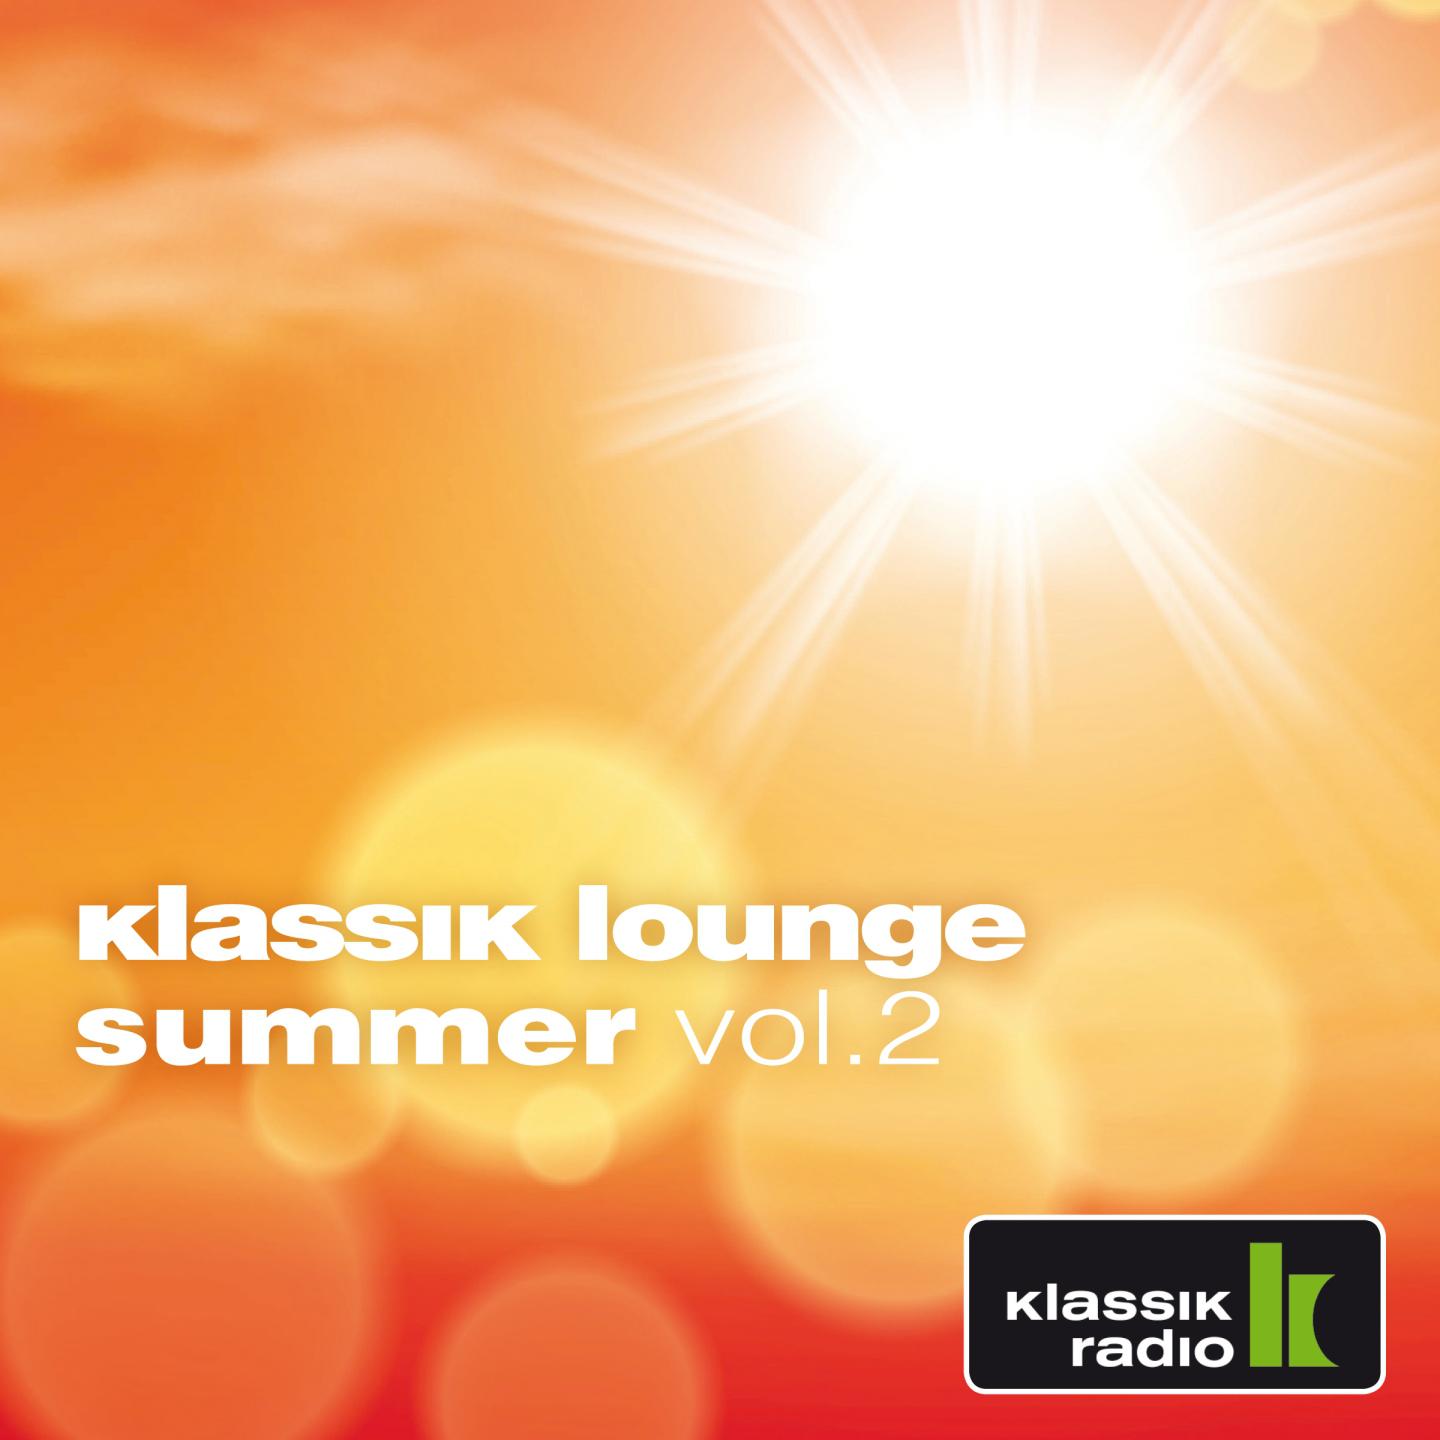 Klassik Lounge Summer, Vol. 2 (Continuous Mix by DJ Nartak, Pt. 2)